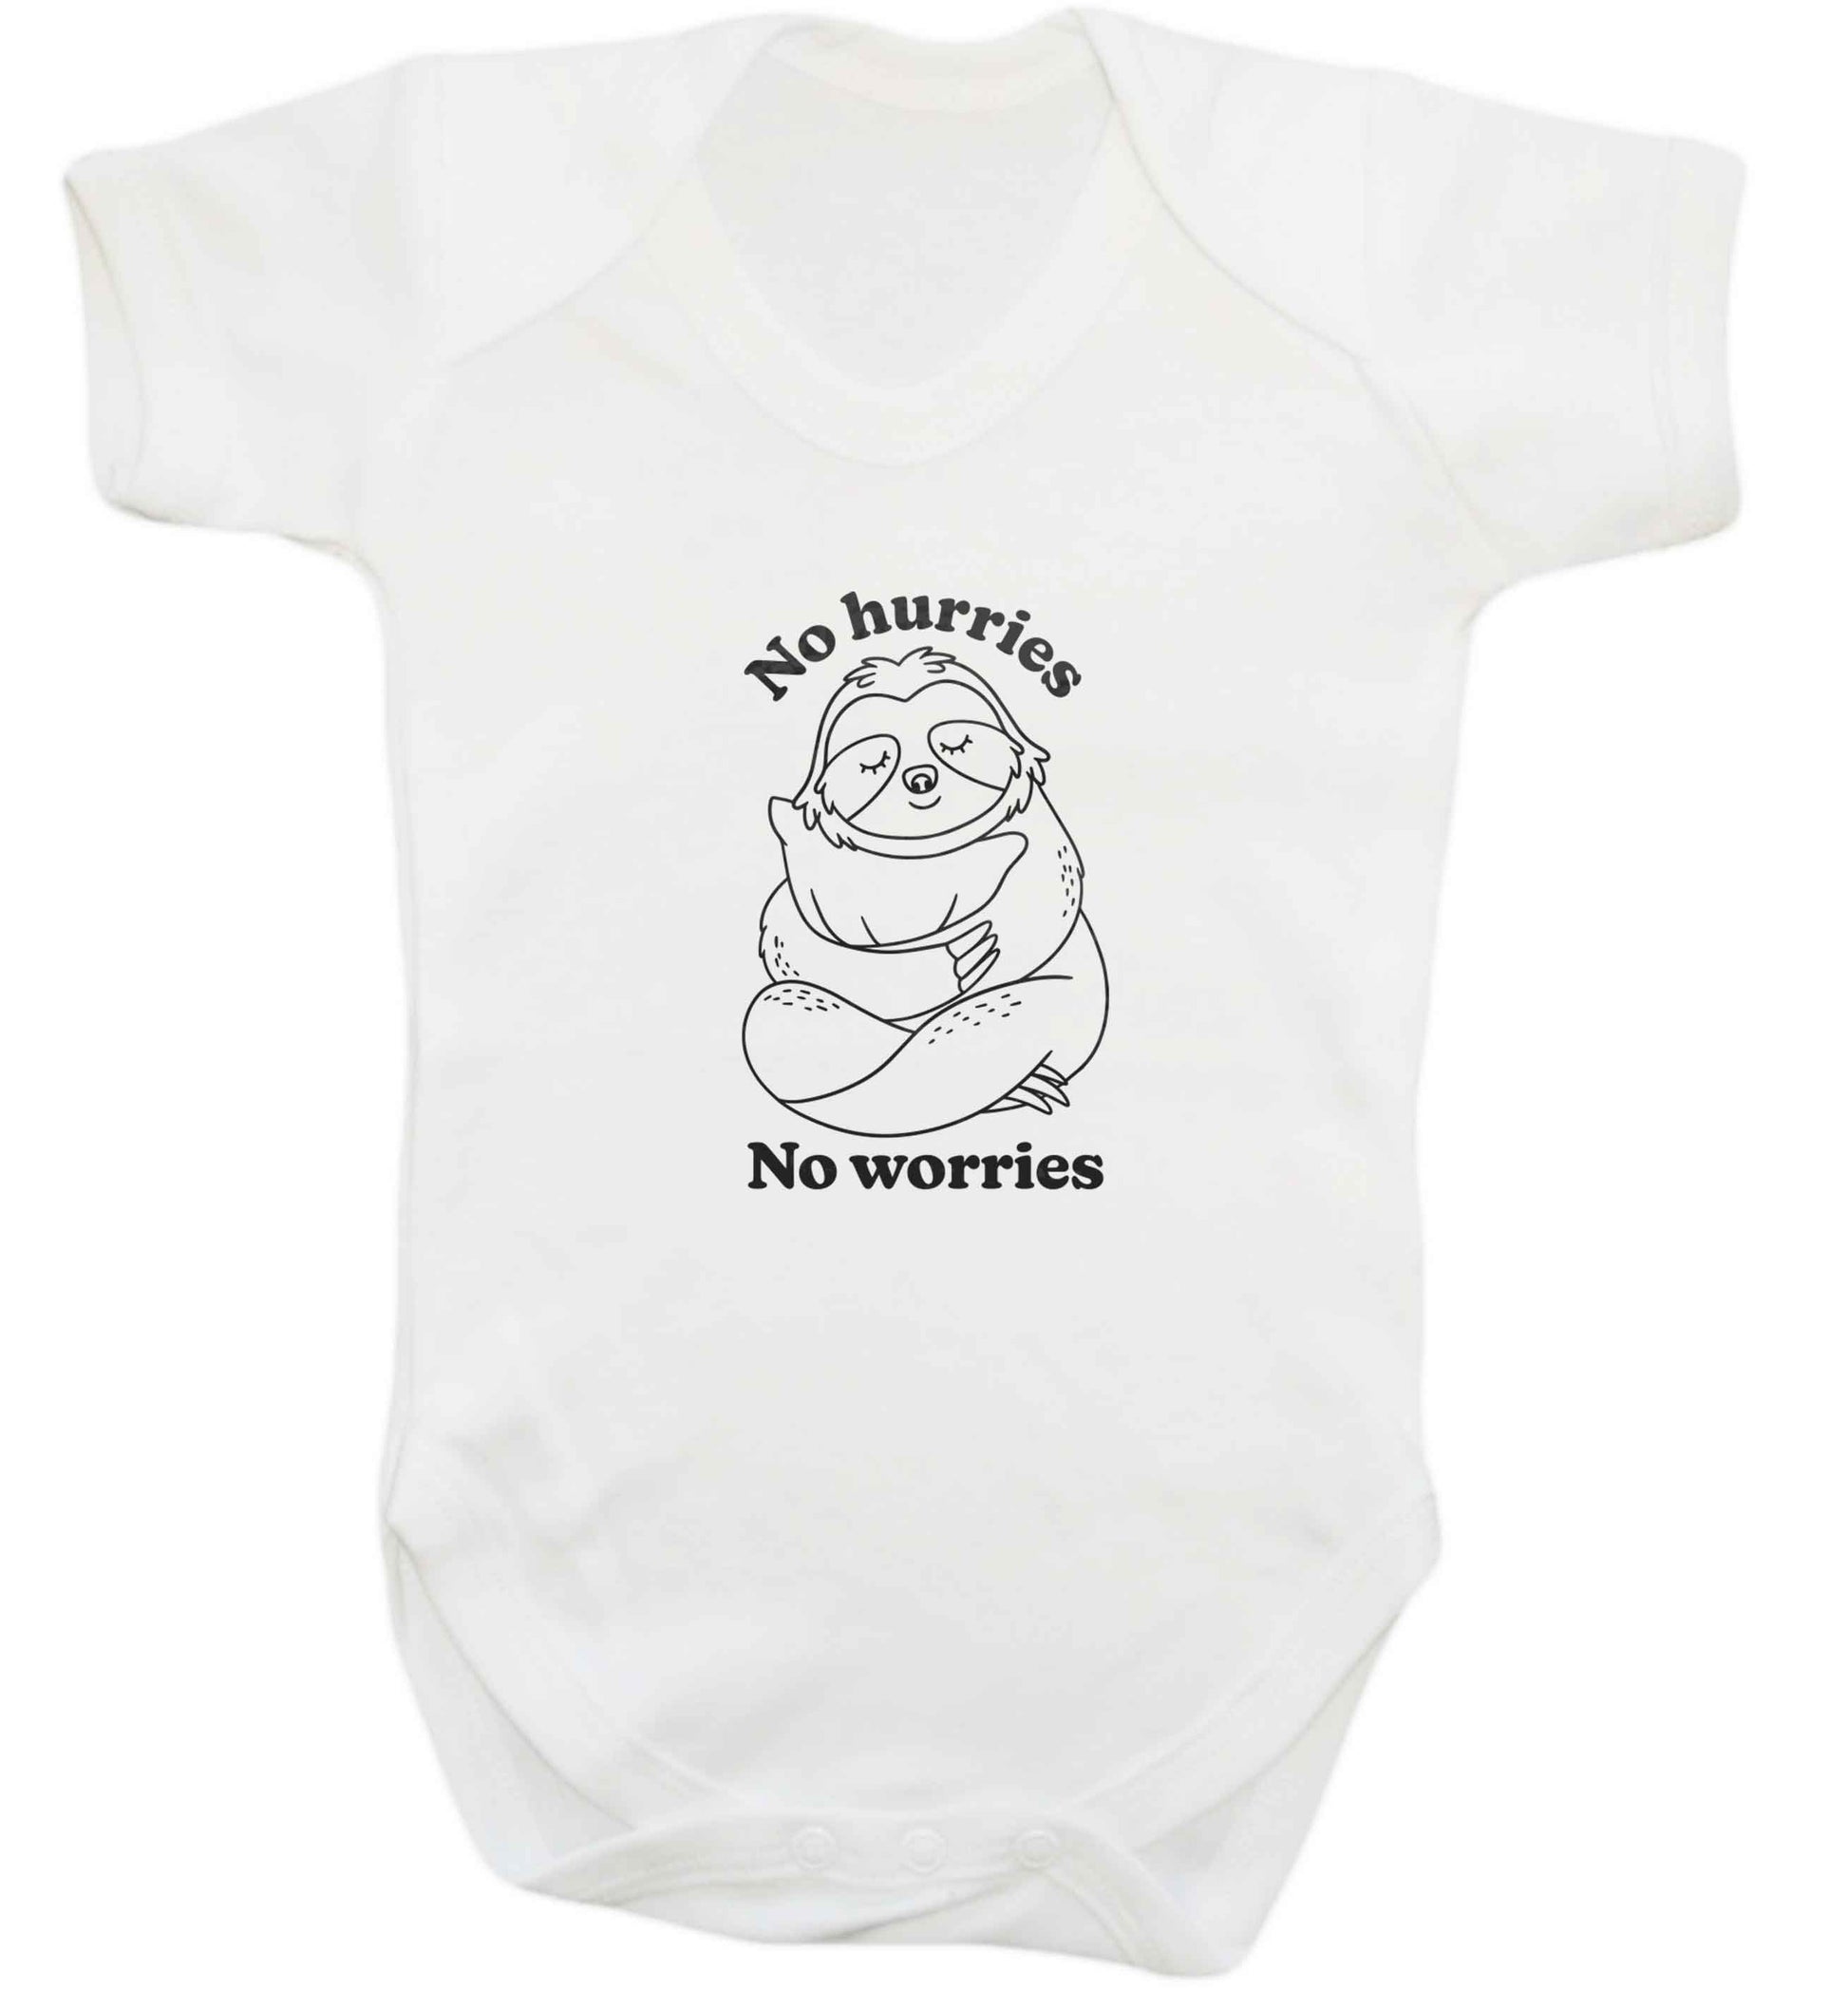 No hurries no worries baby vest white 18-24 months